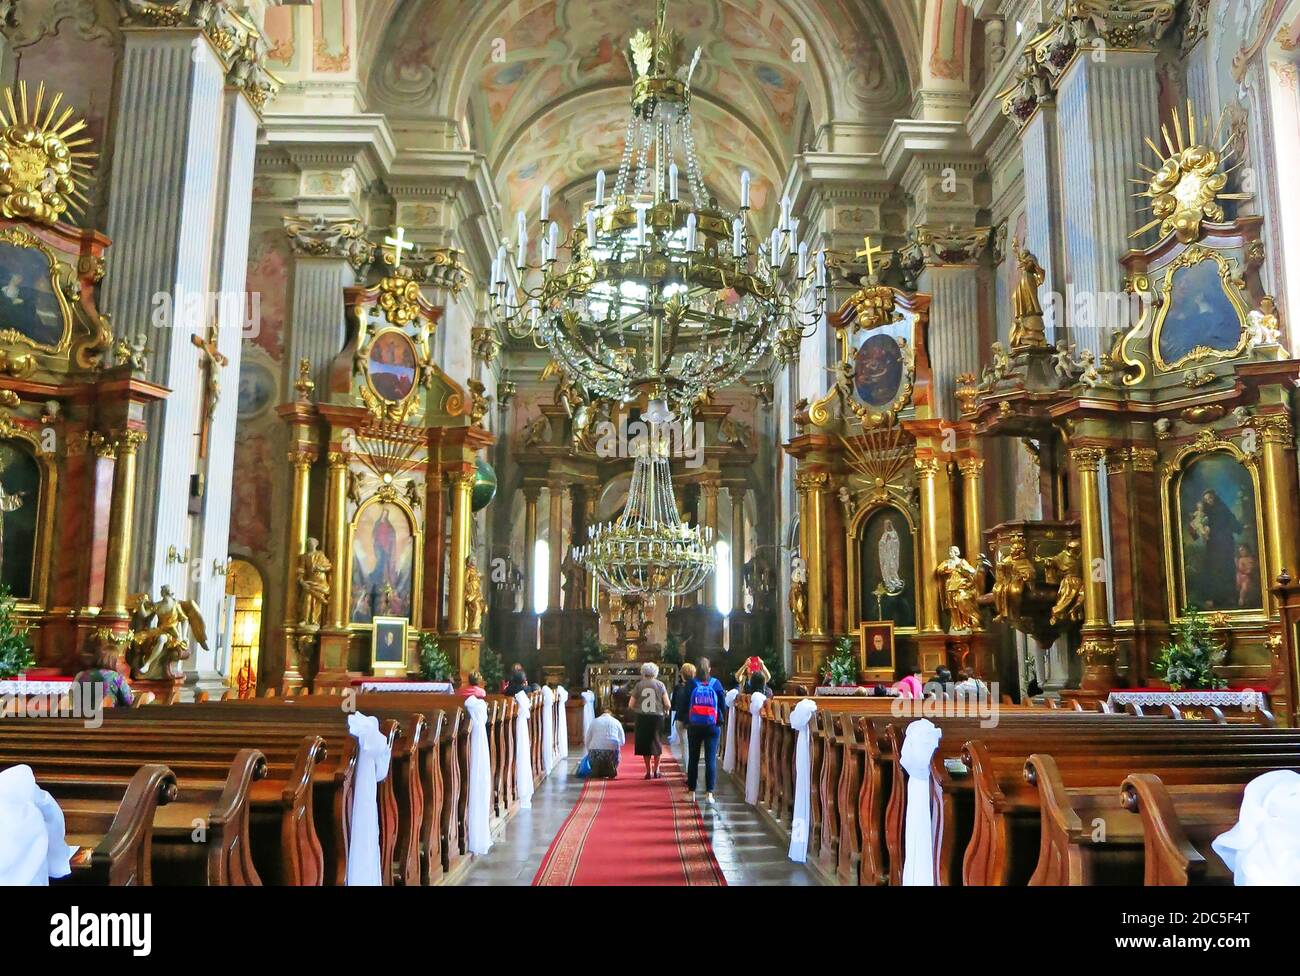 ST Anne’s interior church, Warsaw, Poland Stock Photo